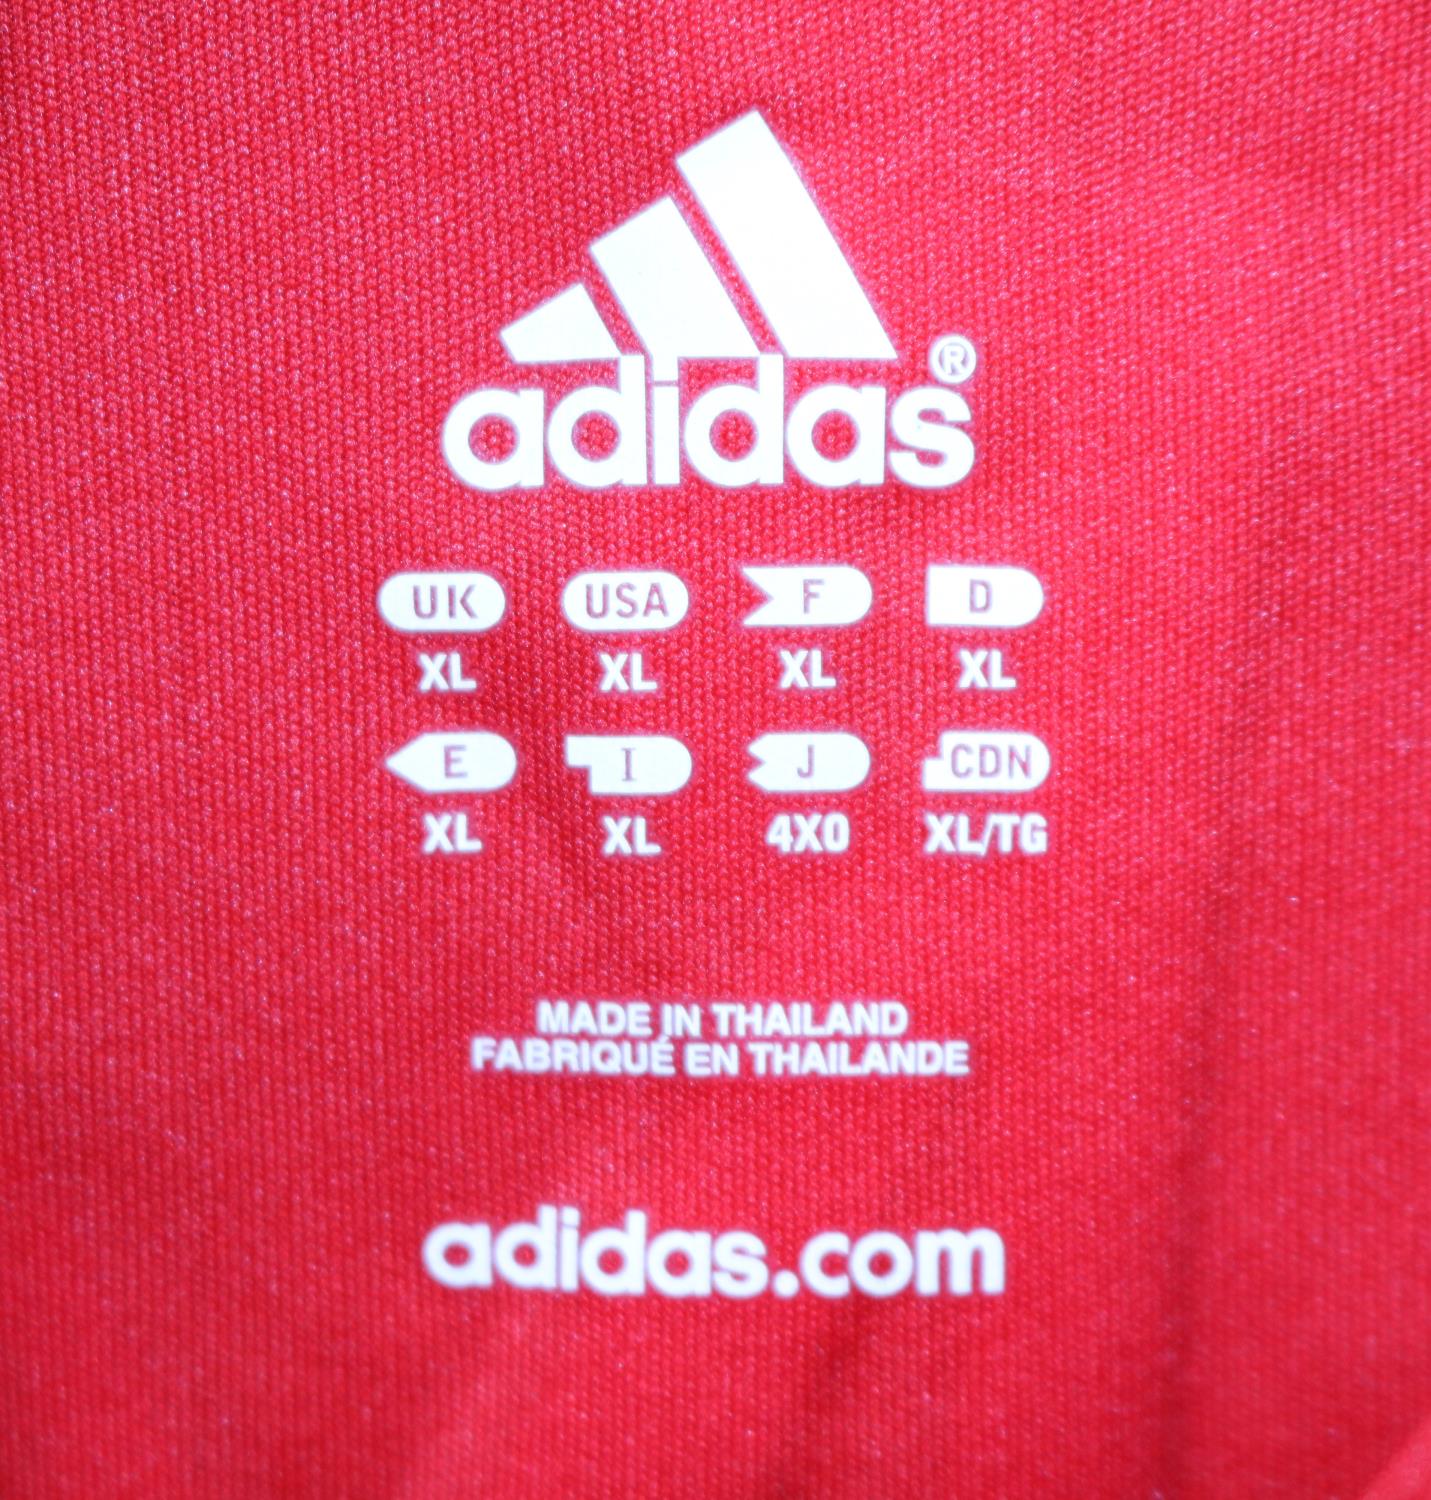 STEVEN GERRARD 2006/07 PREMIER LEAGUE MATCH WORN LIVERPOOL JERSEY Presented in an Adidas brand - Image 6 of 7